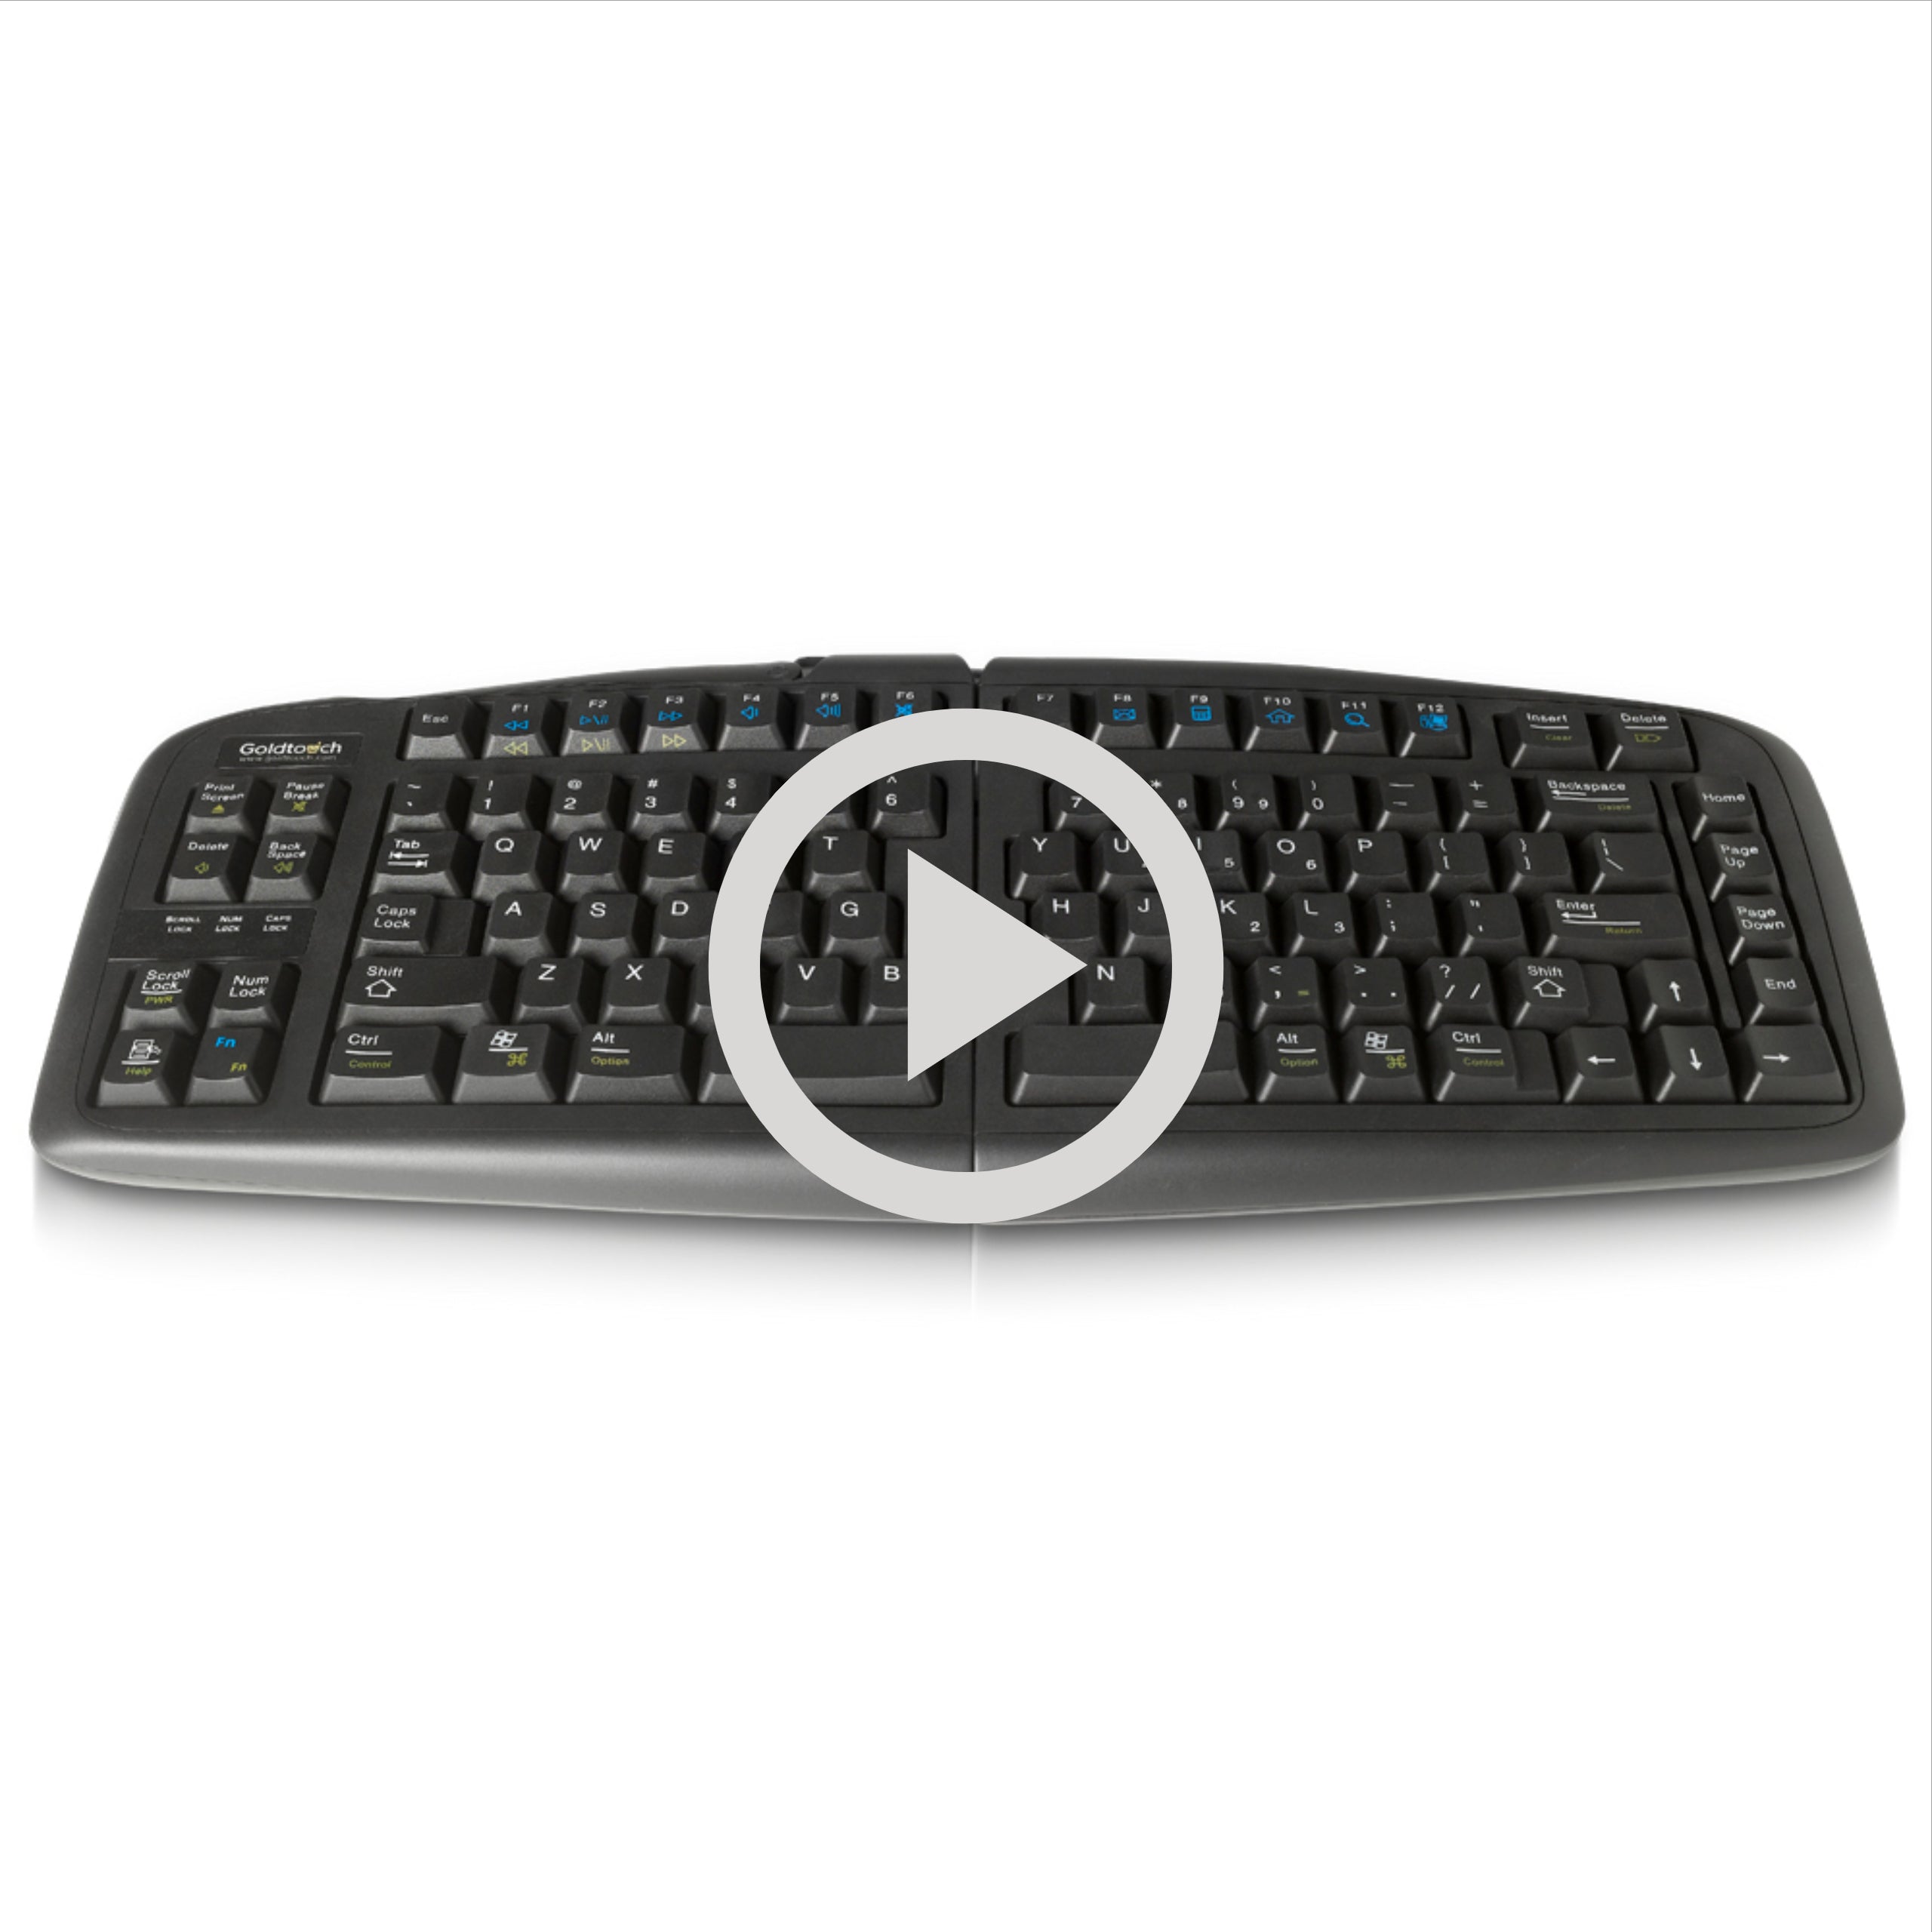 Goldtouch V2 Adjustable Comfort Keyboard | PC and Mac (USB) - GTU-0088